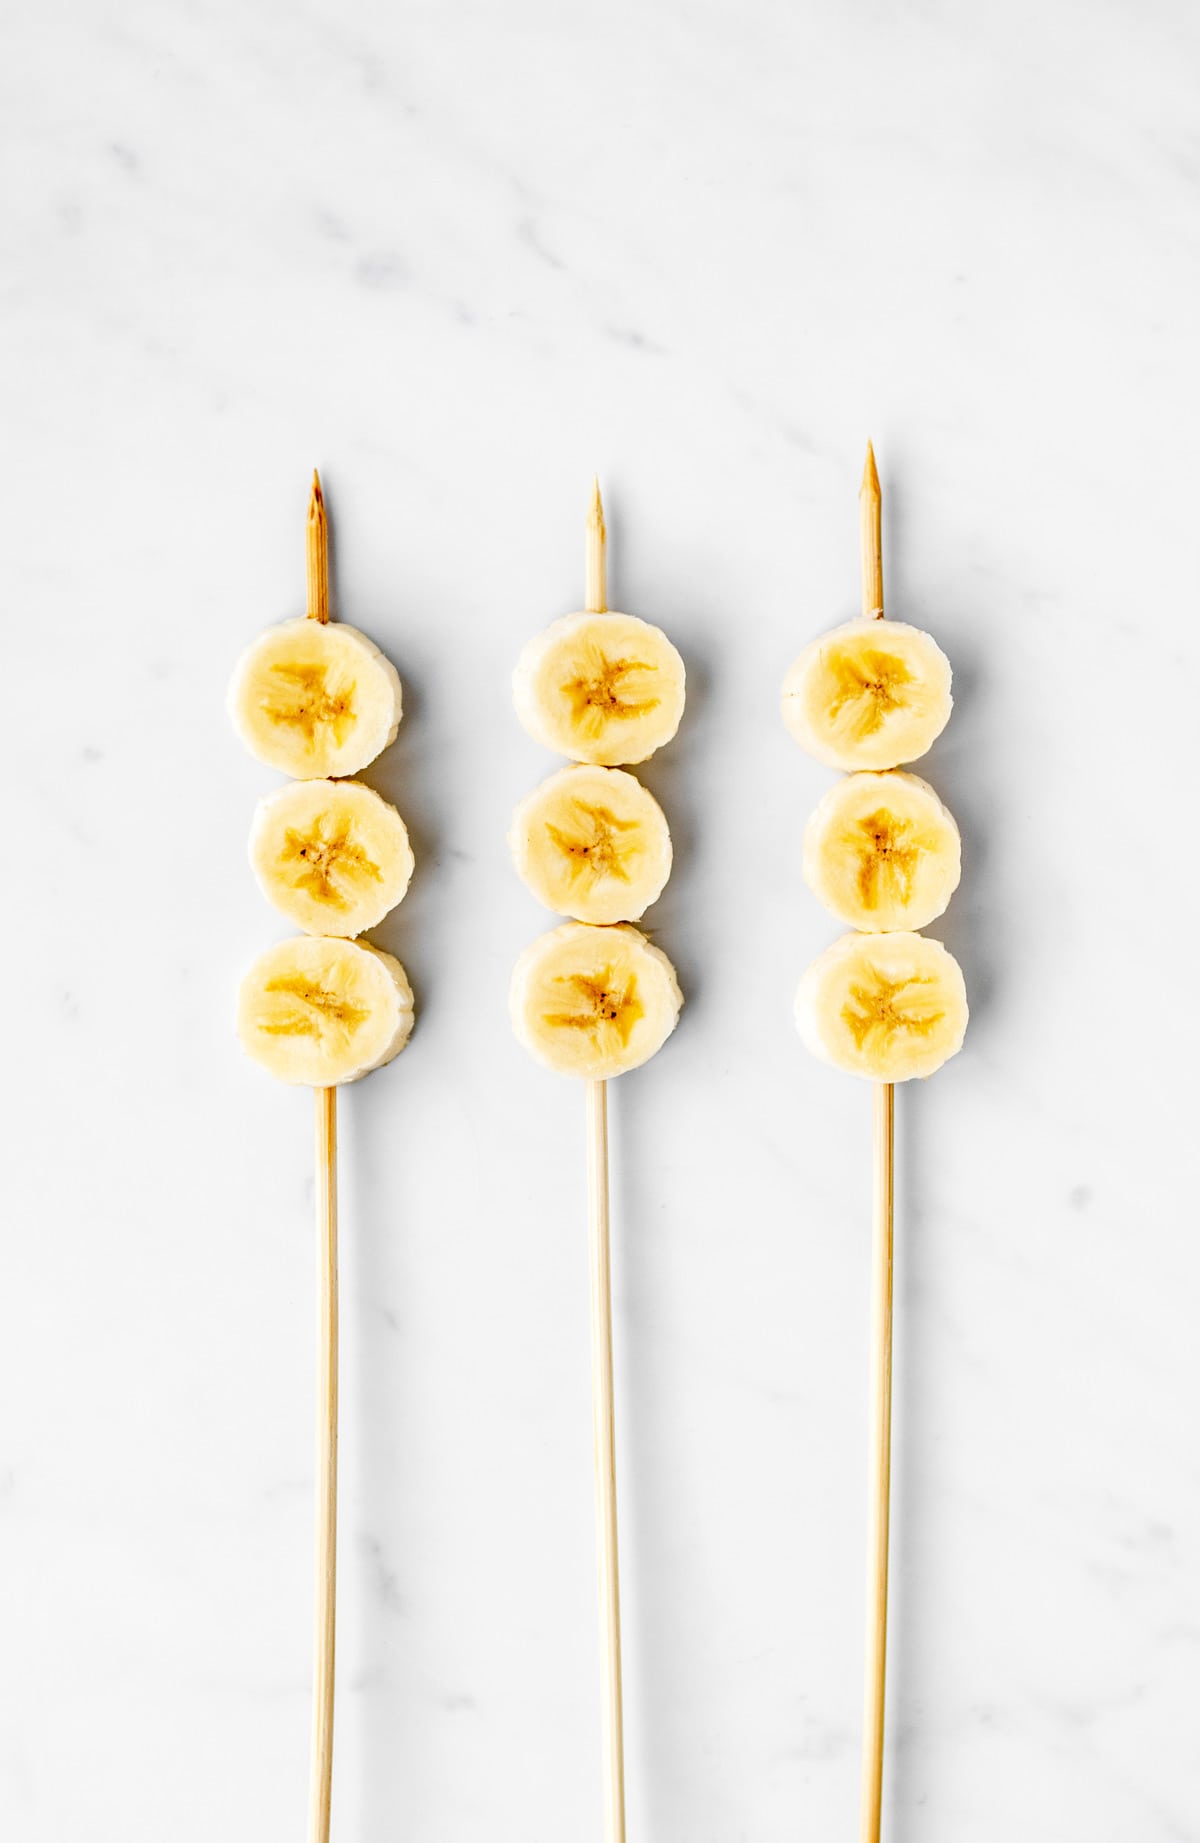 Three sticks with three banana slices on each one.